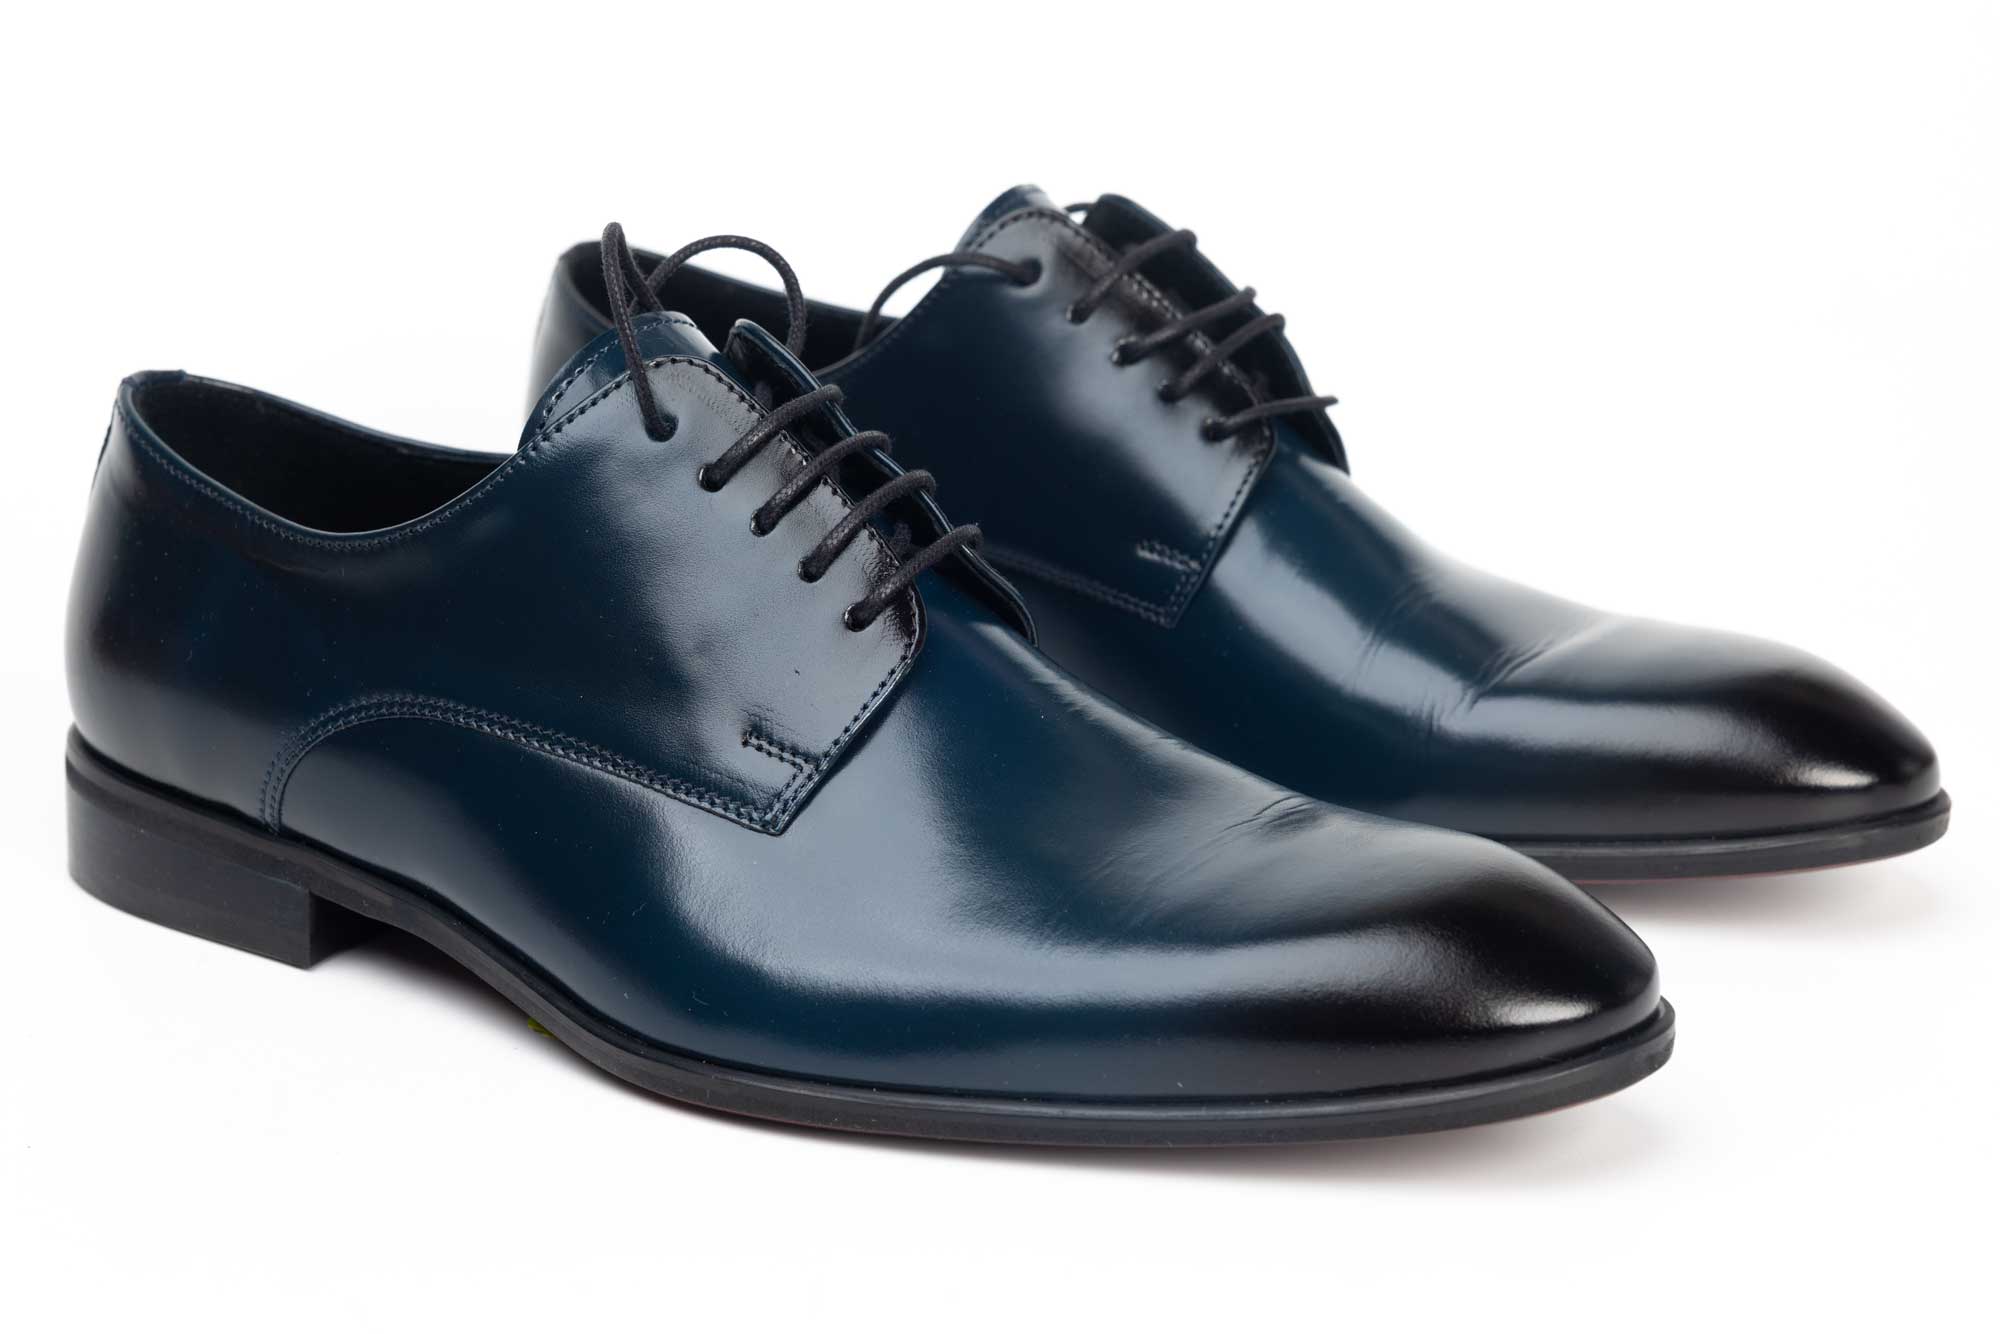 Pantofi barbati din piele naturala 8520 blue